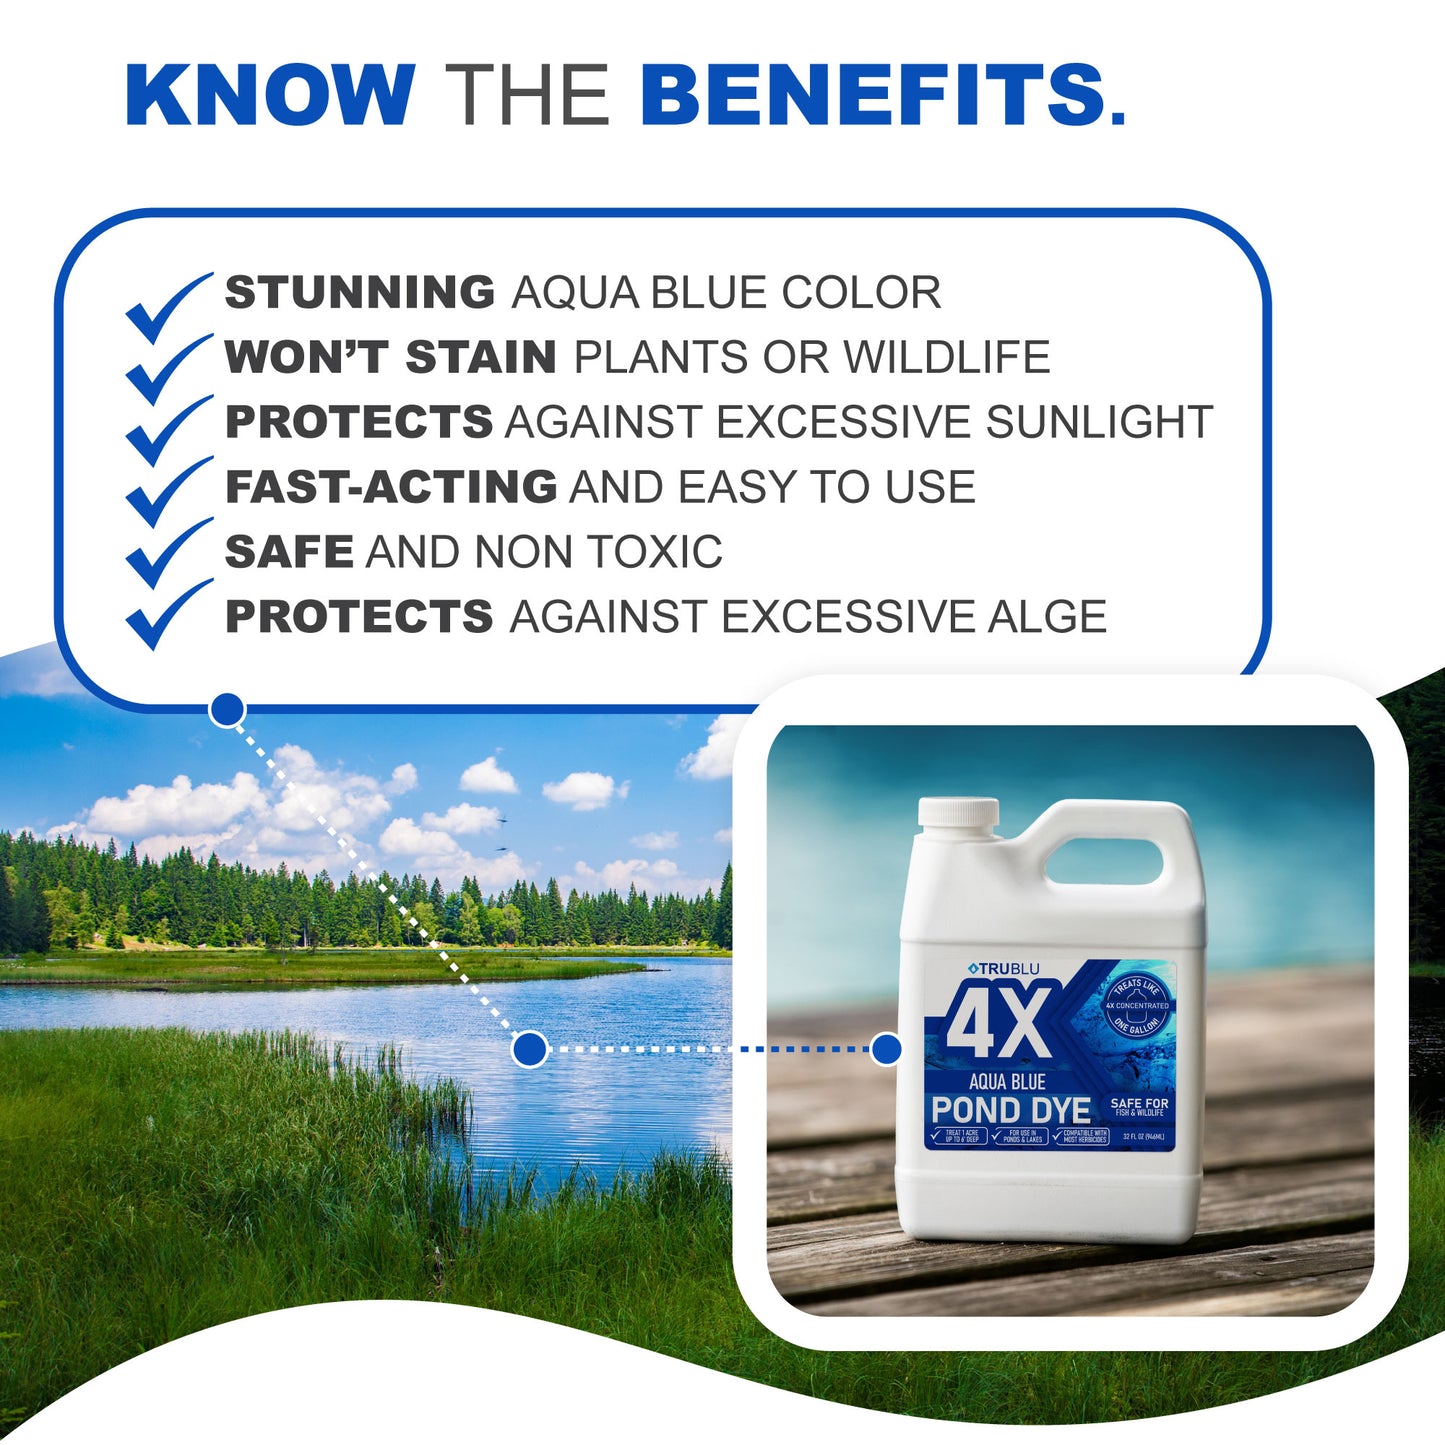 TruBlu Concentrated Aqua Blue Pond Dye - Living Water Aeration